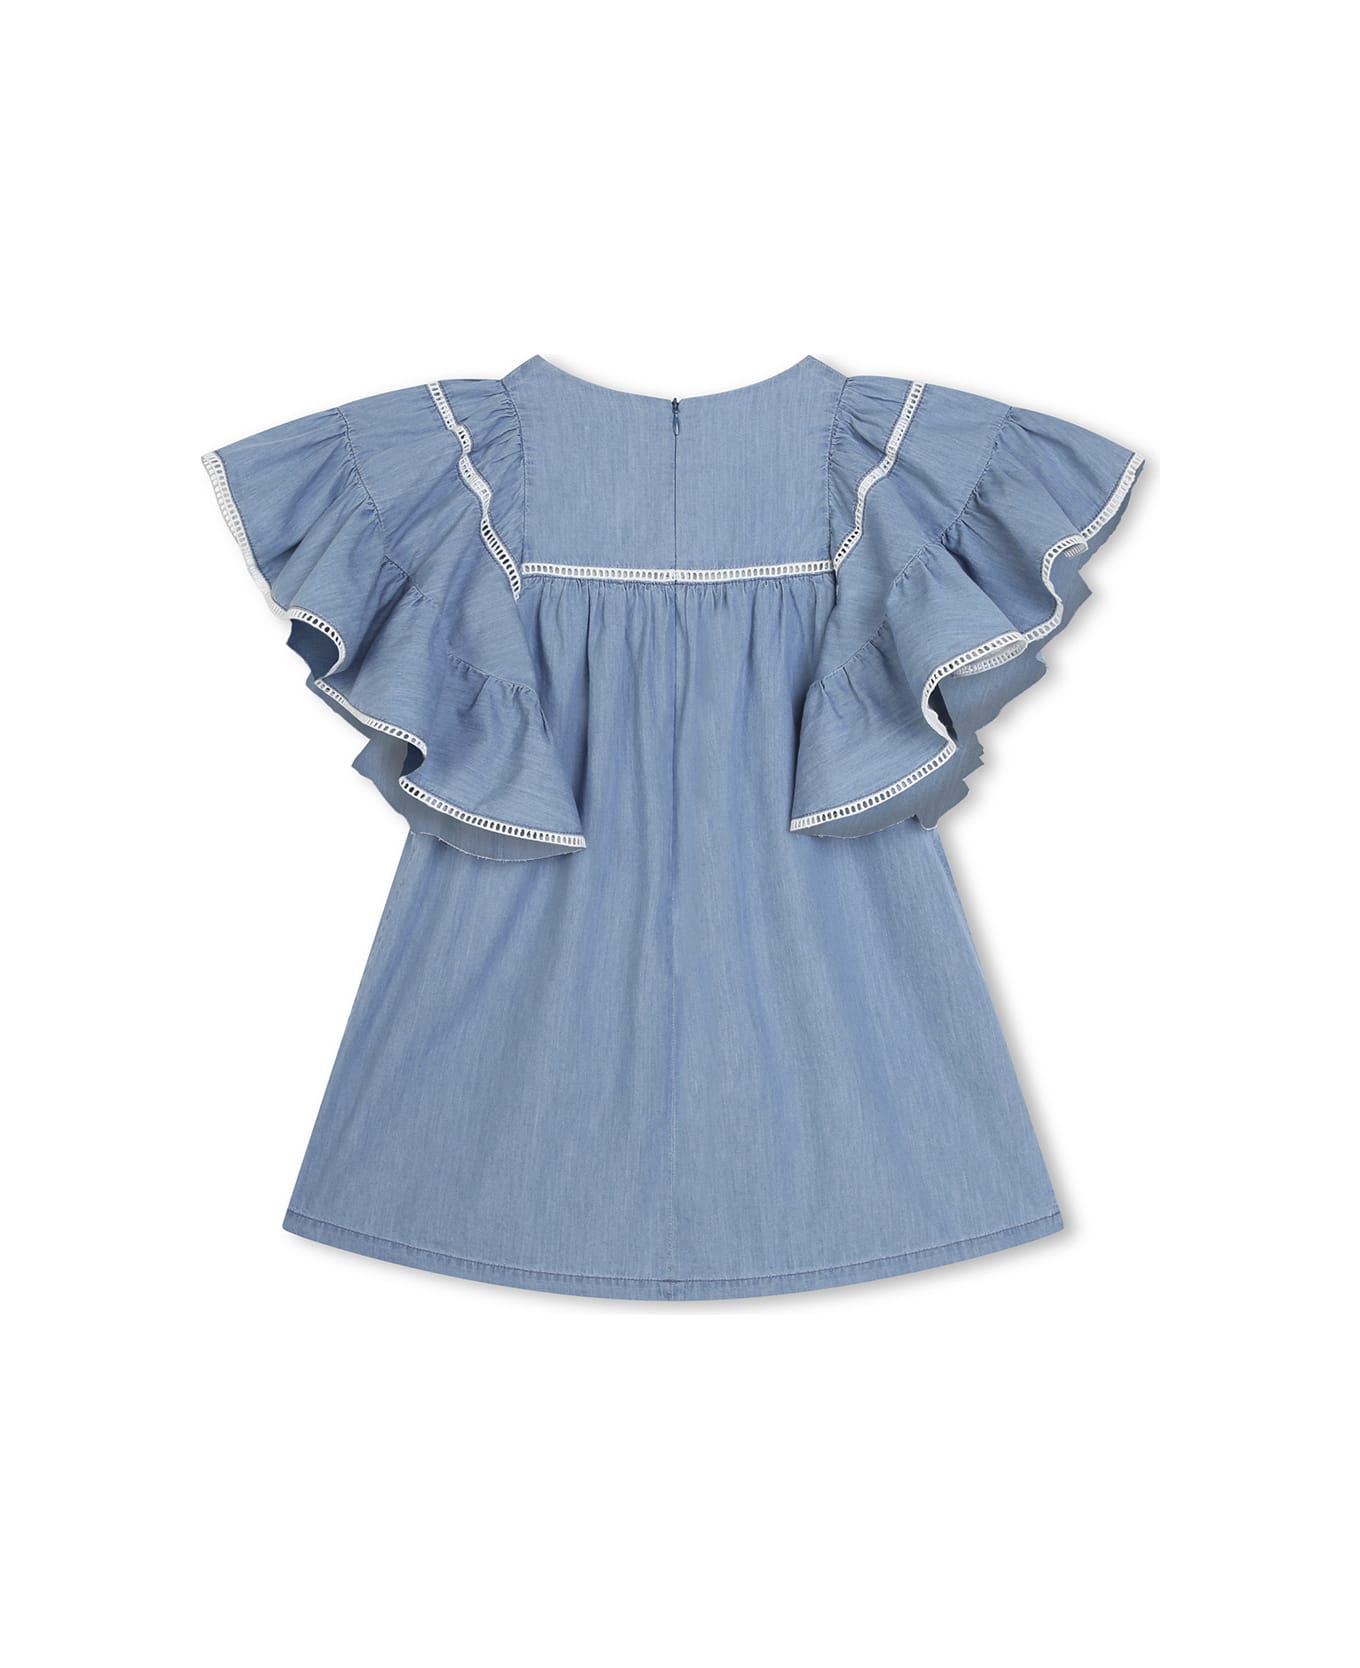 Chloé Medium Blue Dress With Ruffle And Ladder Stitch Detailing - Blue